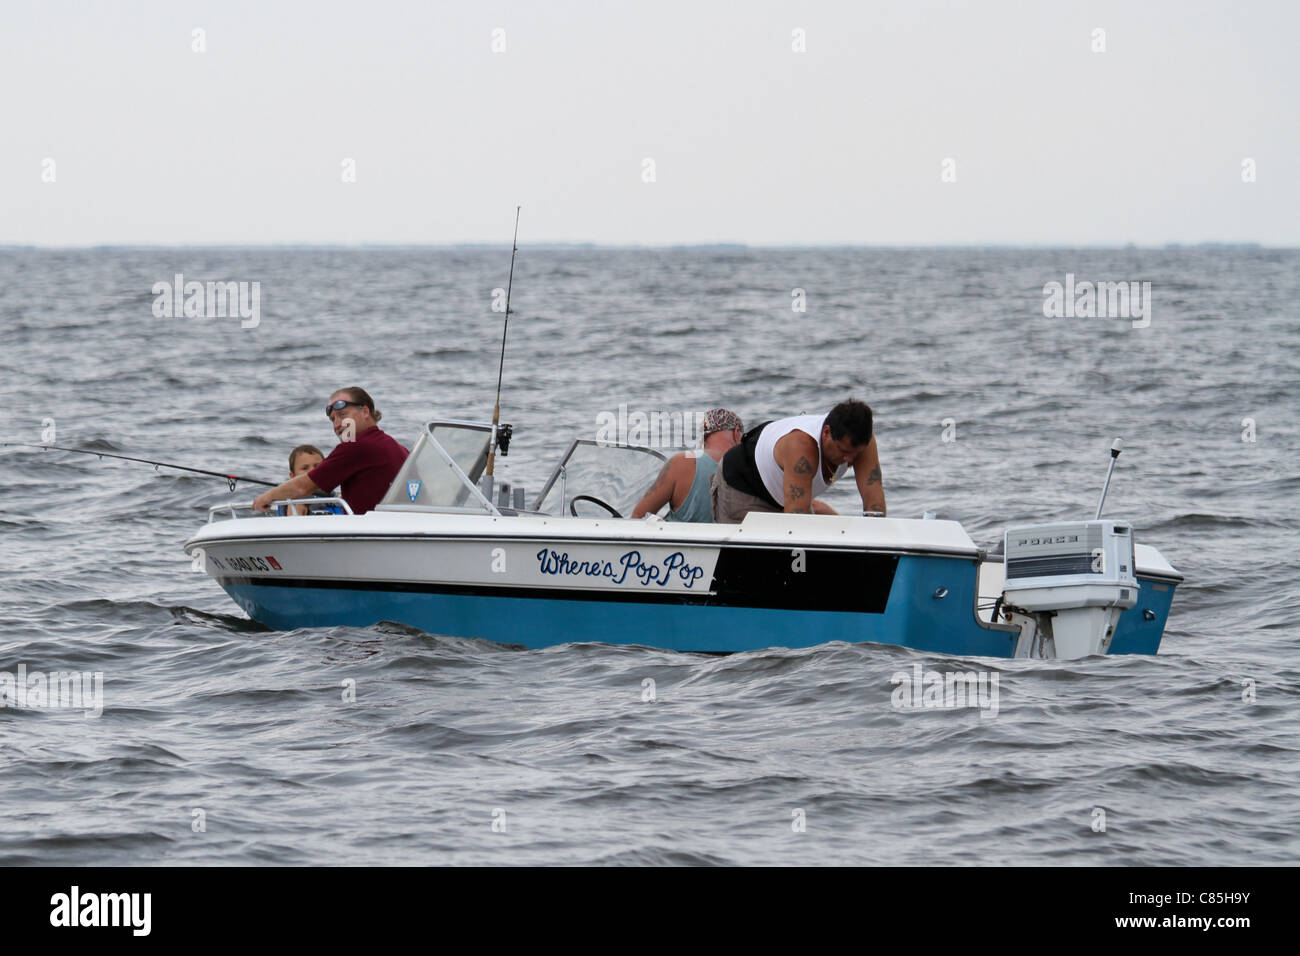 https://c8.alamy.com/comp/C85H9Y/family-fishing-boat-wheres-pop-pop-C85H9Y.jpg